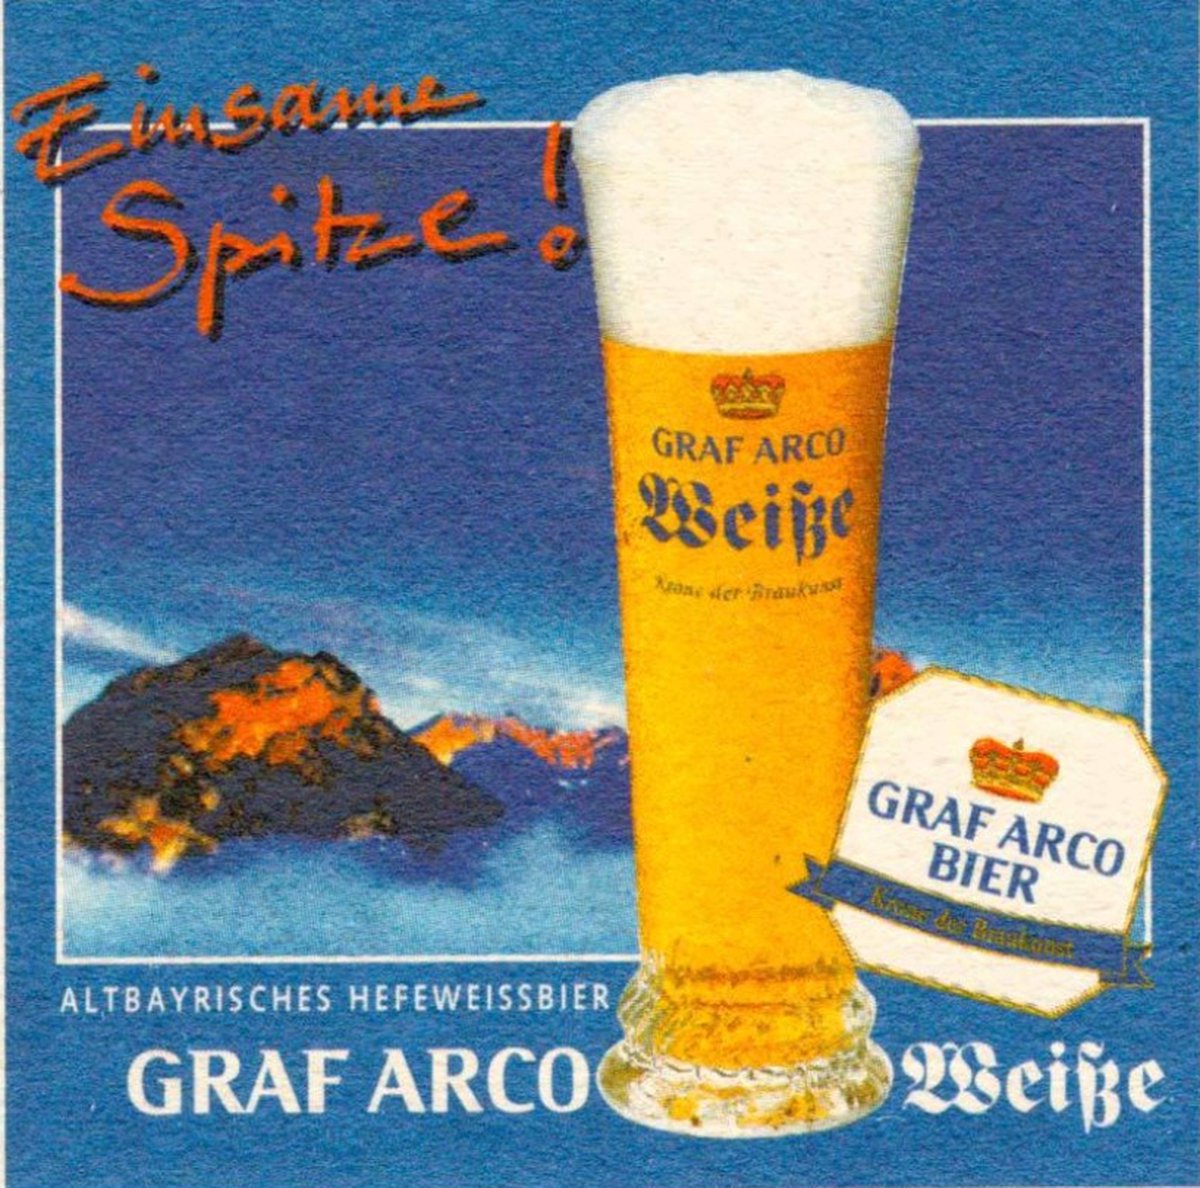 Hefe Weiss Weizen Bierglas 6x500ml Bokaal doos bier glas | glazen bierglazen weissbier